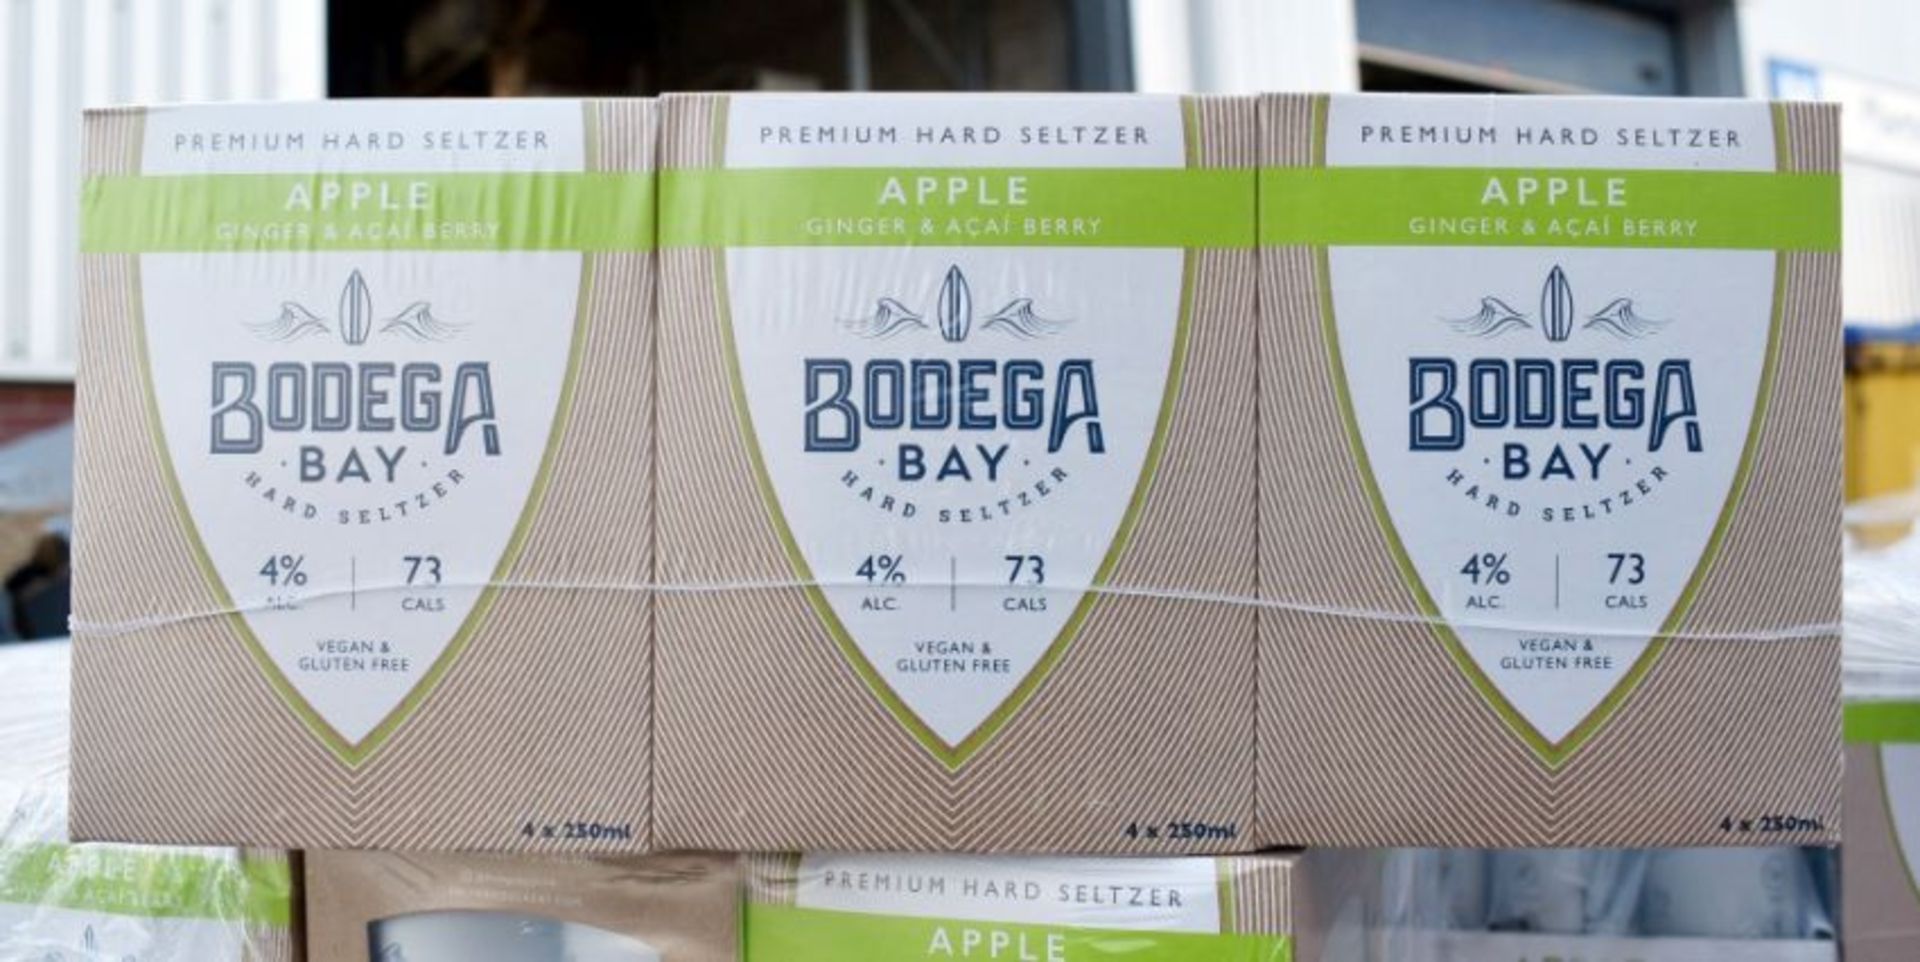 24 x Bodega Bay Hard Seltzer 250ml Alcoholic Sparkling Water Drinks - Apple Ginger & Acai Berry - Image 2 of 9